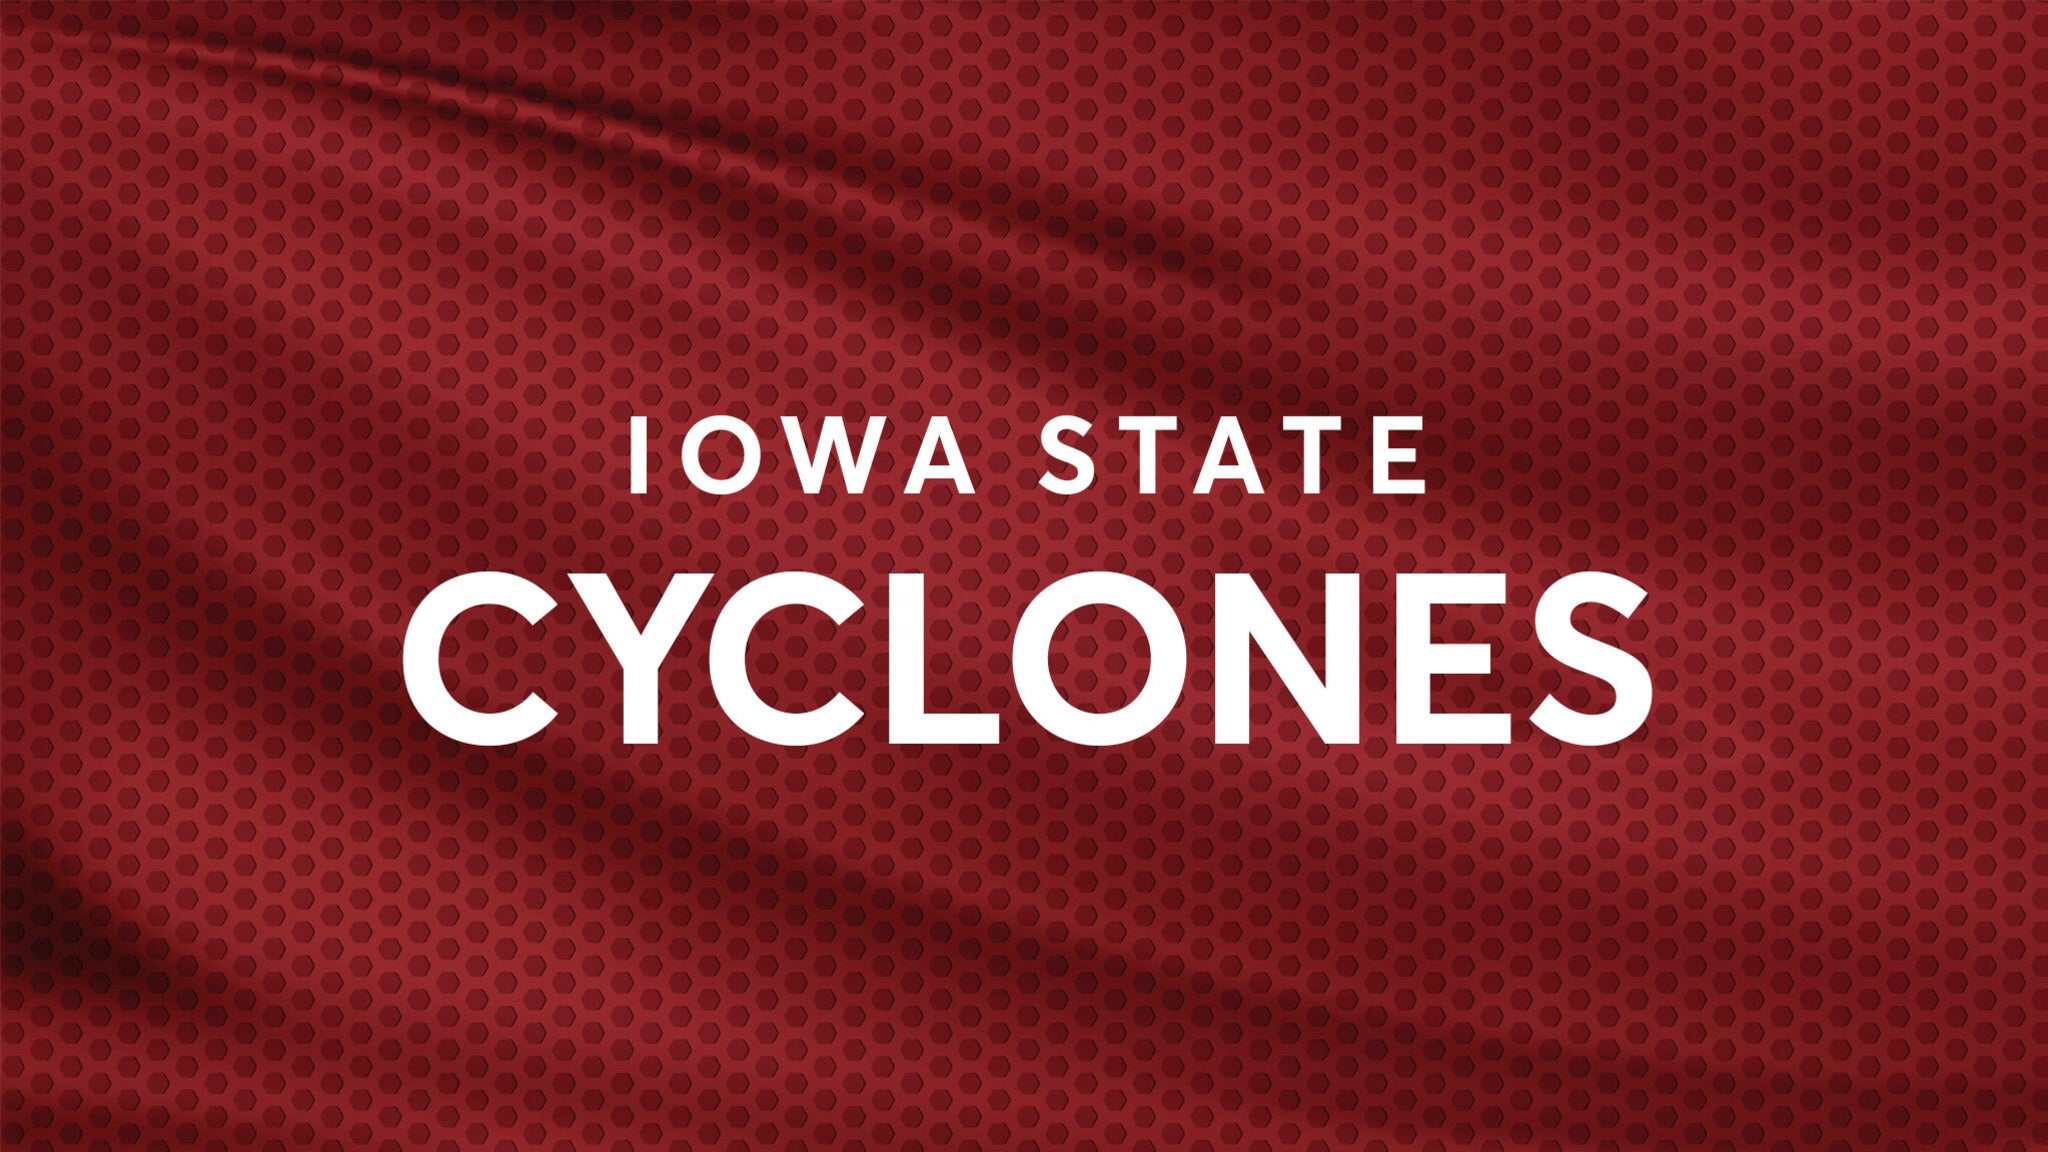 Iowa State Cyclones Volleyball presale information on freepresalepasswords.com